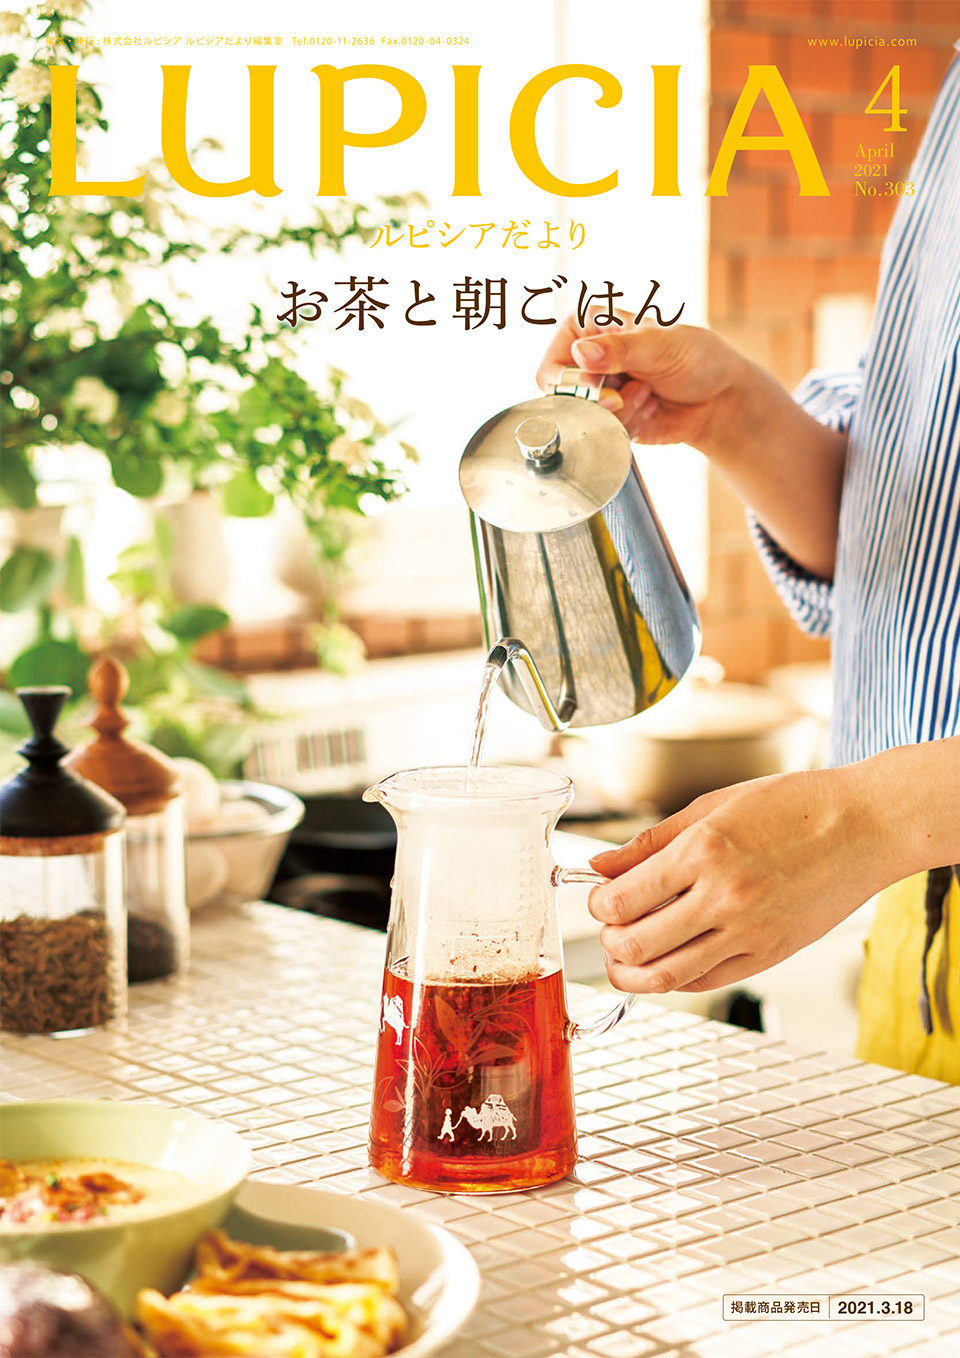 Lupicia 世界のお茶専門店 ルピシア 紅茶 緑茶 烏龍茶 ハーブ